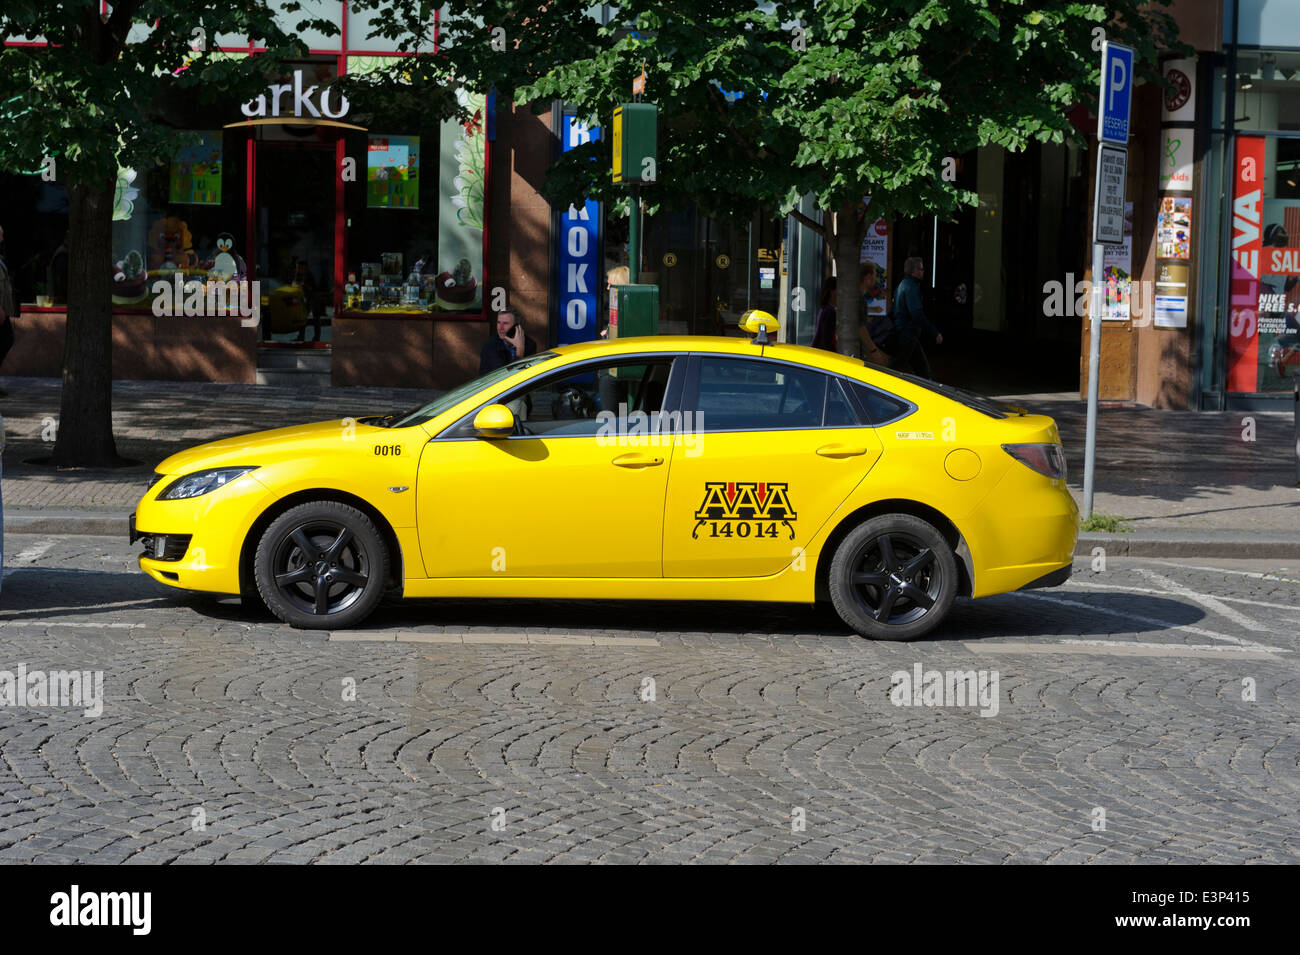 Offiziellen gelben Taxis am Taxistand, Prag, Tschechische Republik. Stockfoto